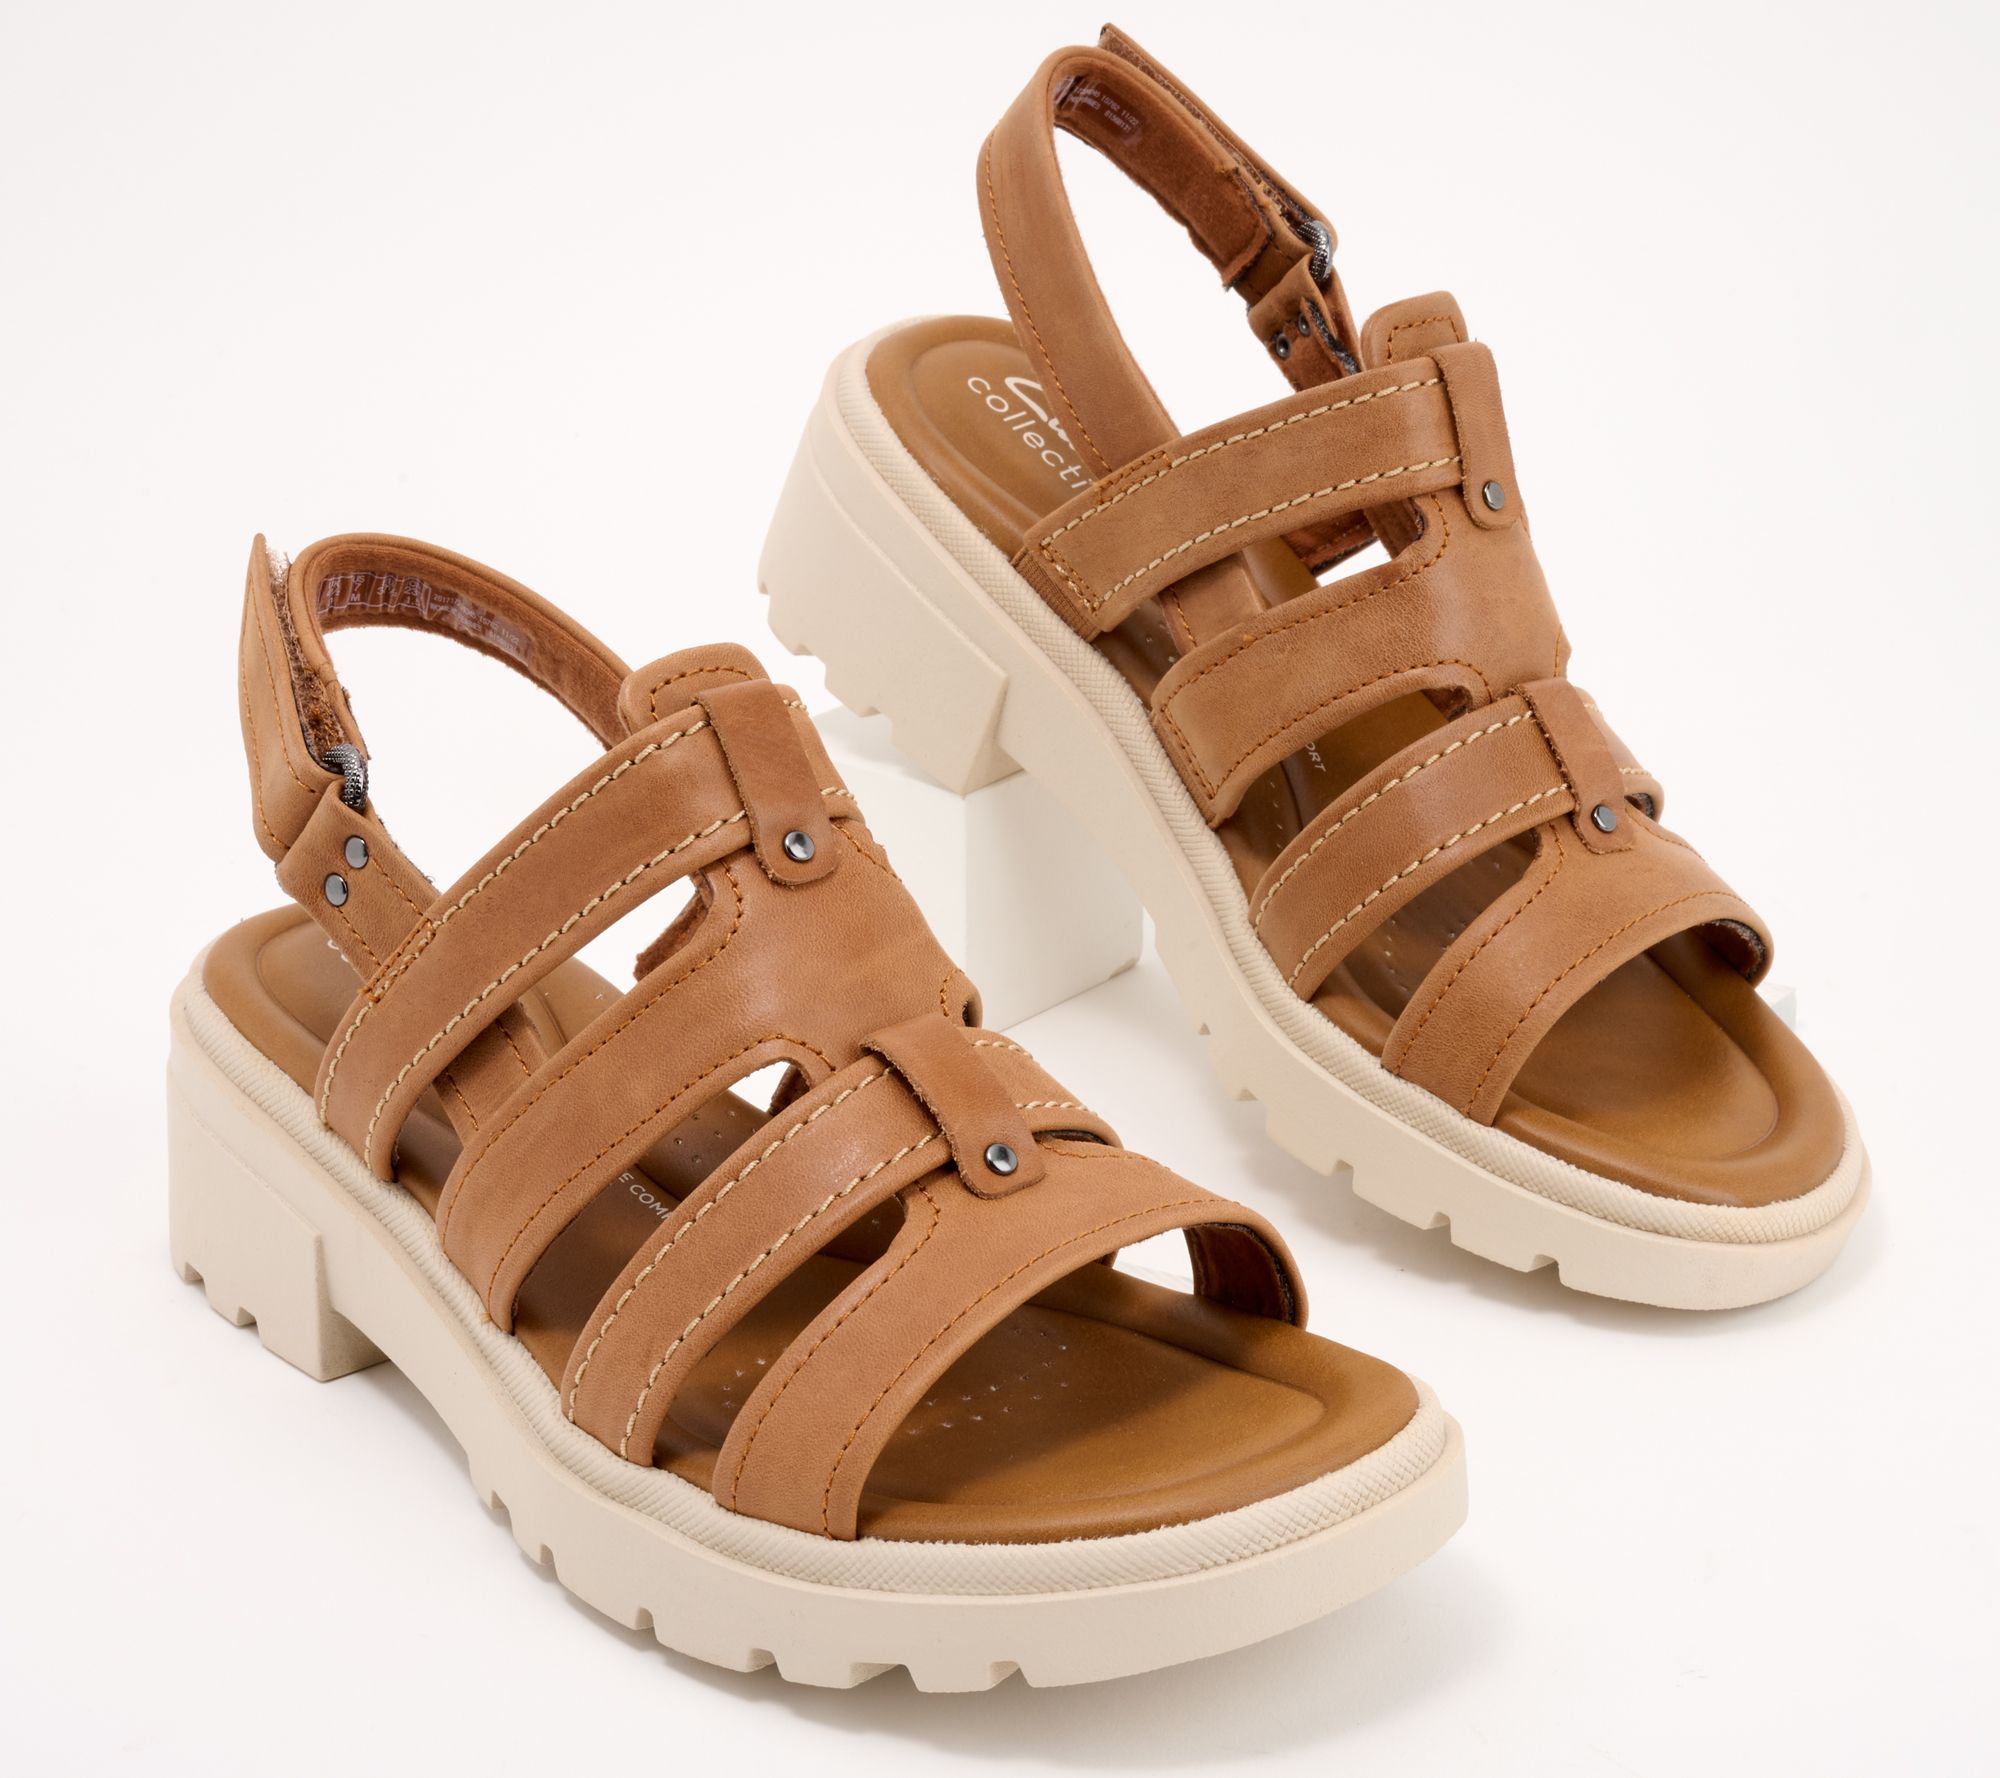 Simpático Desconexión a tiempo Clarks Collection Leather Sandals - Coast Shine - QVC.com